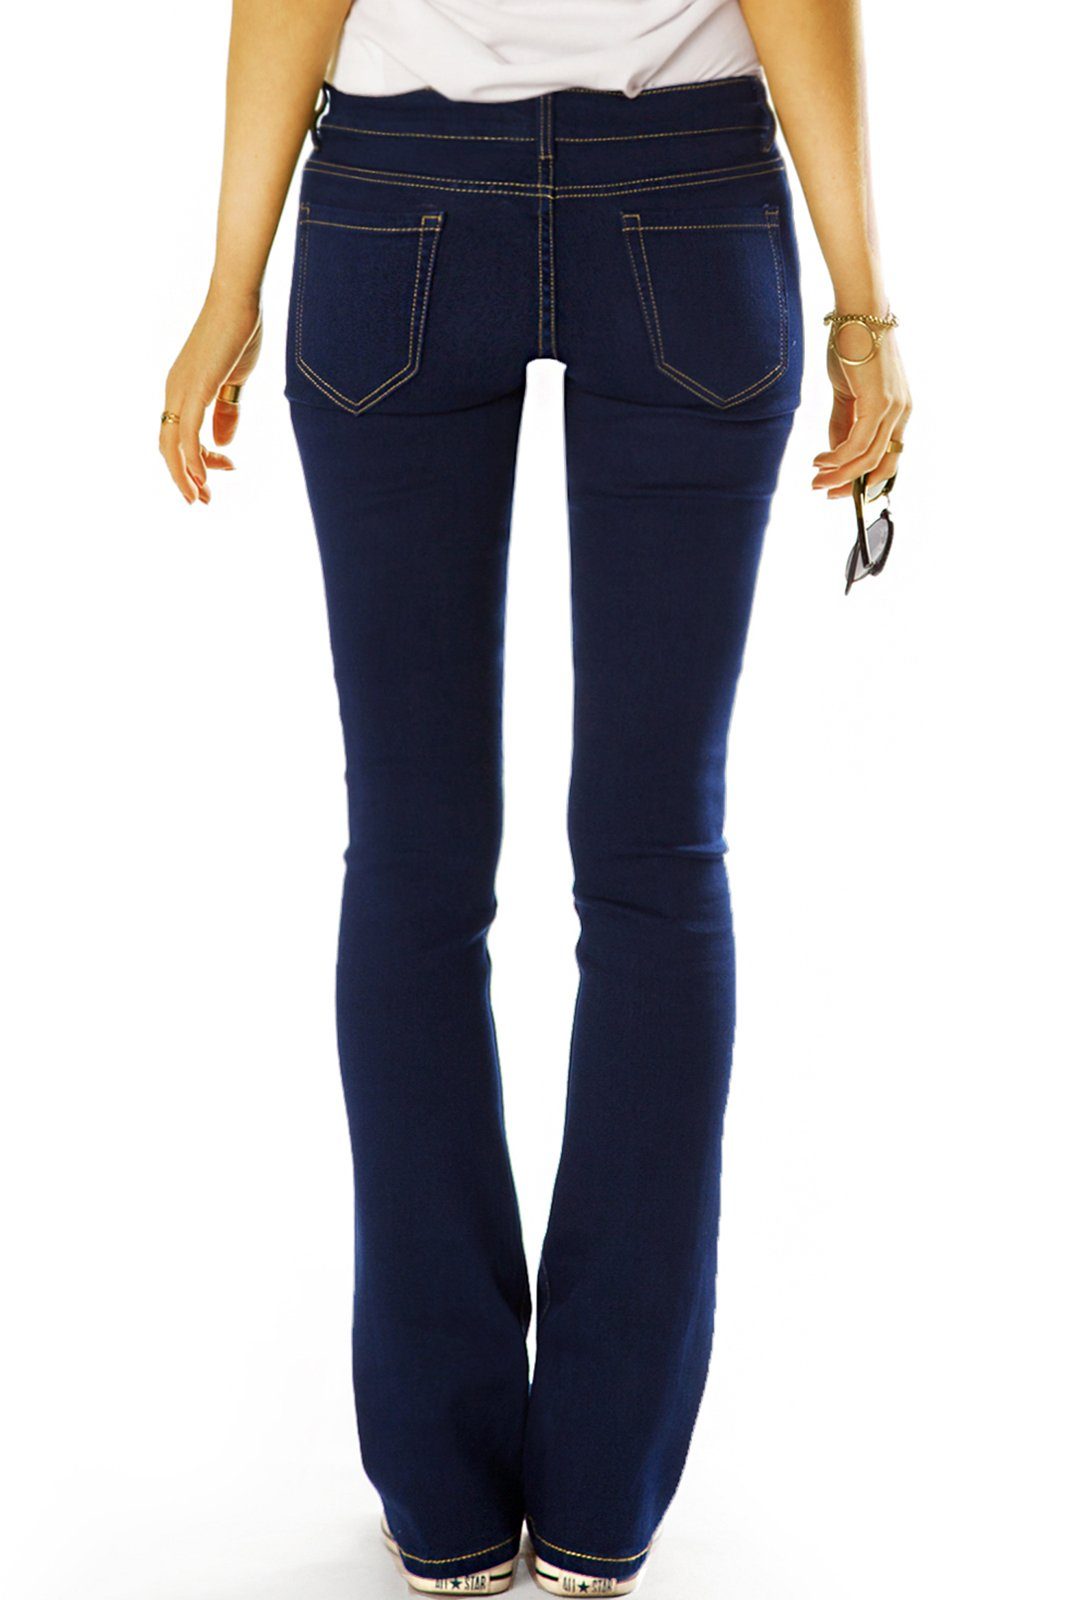 schwarz Damen -j18g Jeanshose Stretch-Anteil, 5-Pocket-Style Stretchjeans Hüftjeans Bootcut-Jeans Bootcut styled - mit be